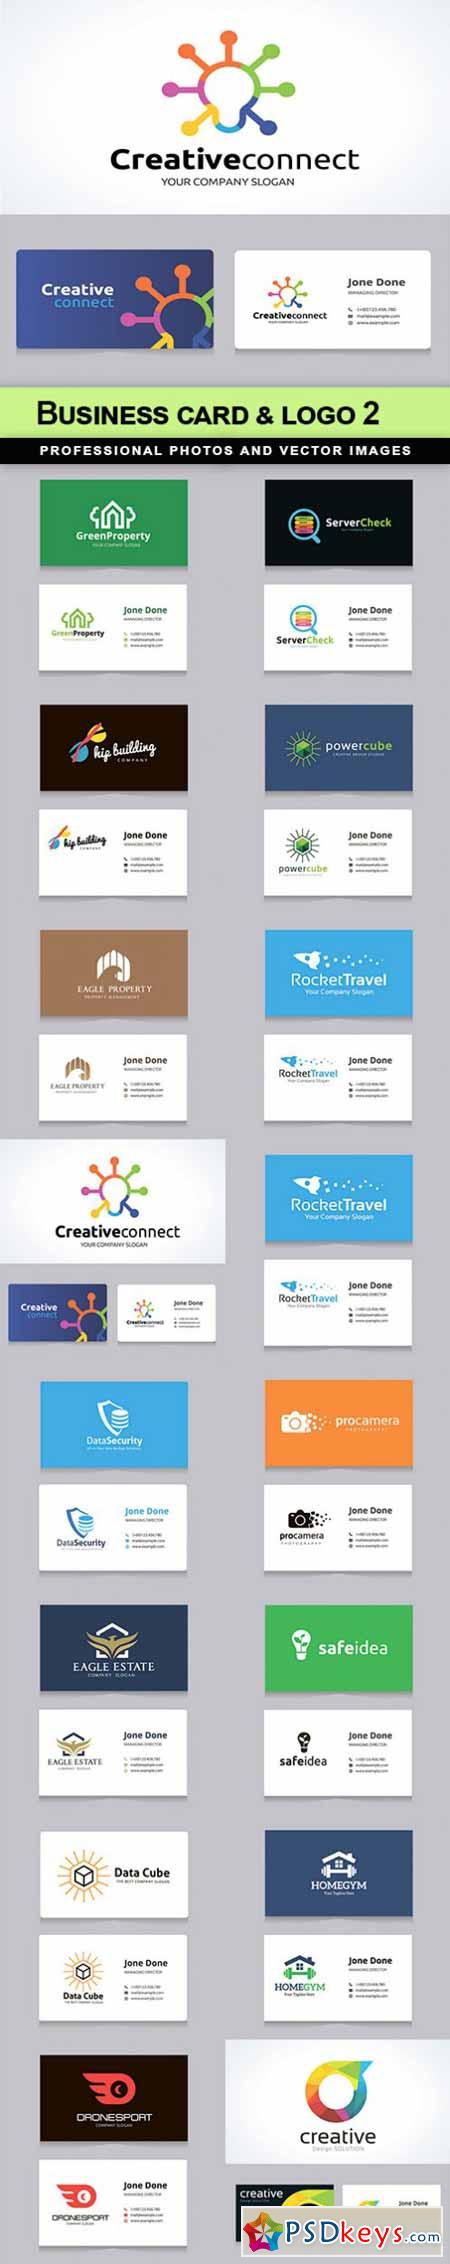 Business card & logo 2 - 16 EPS